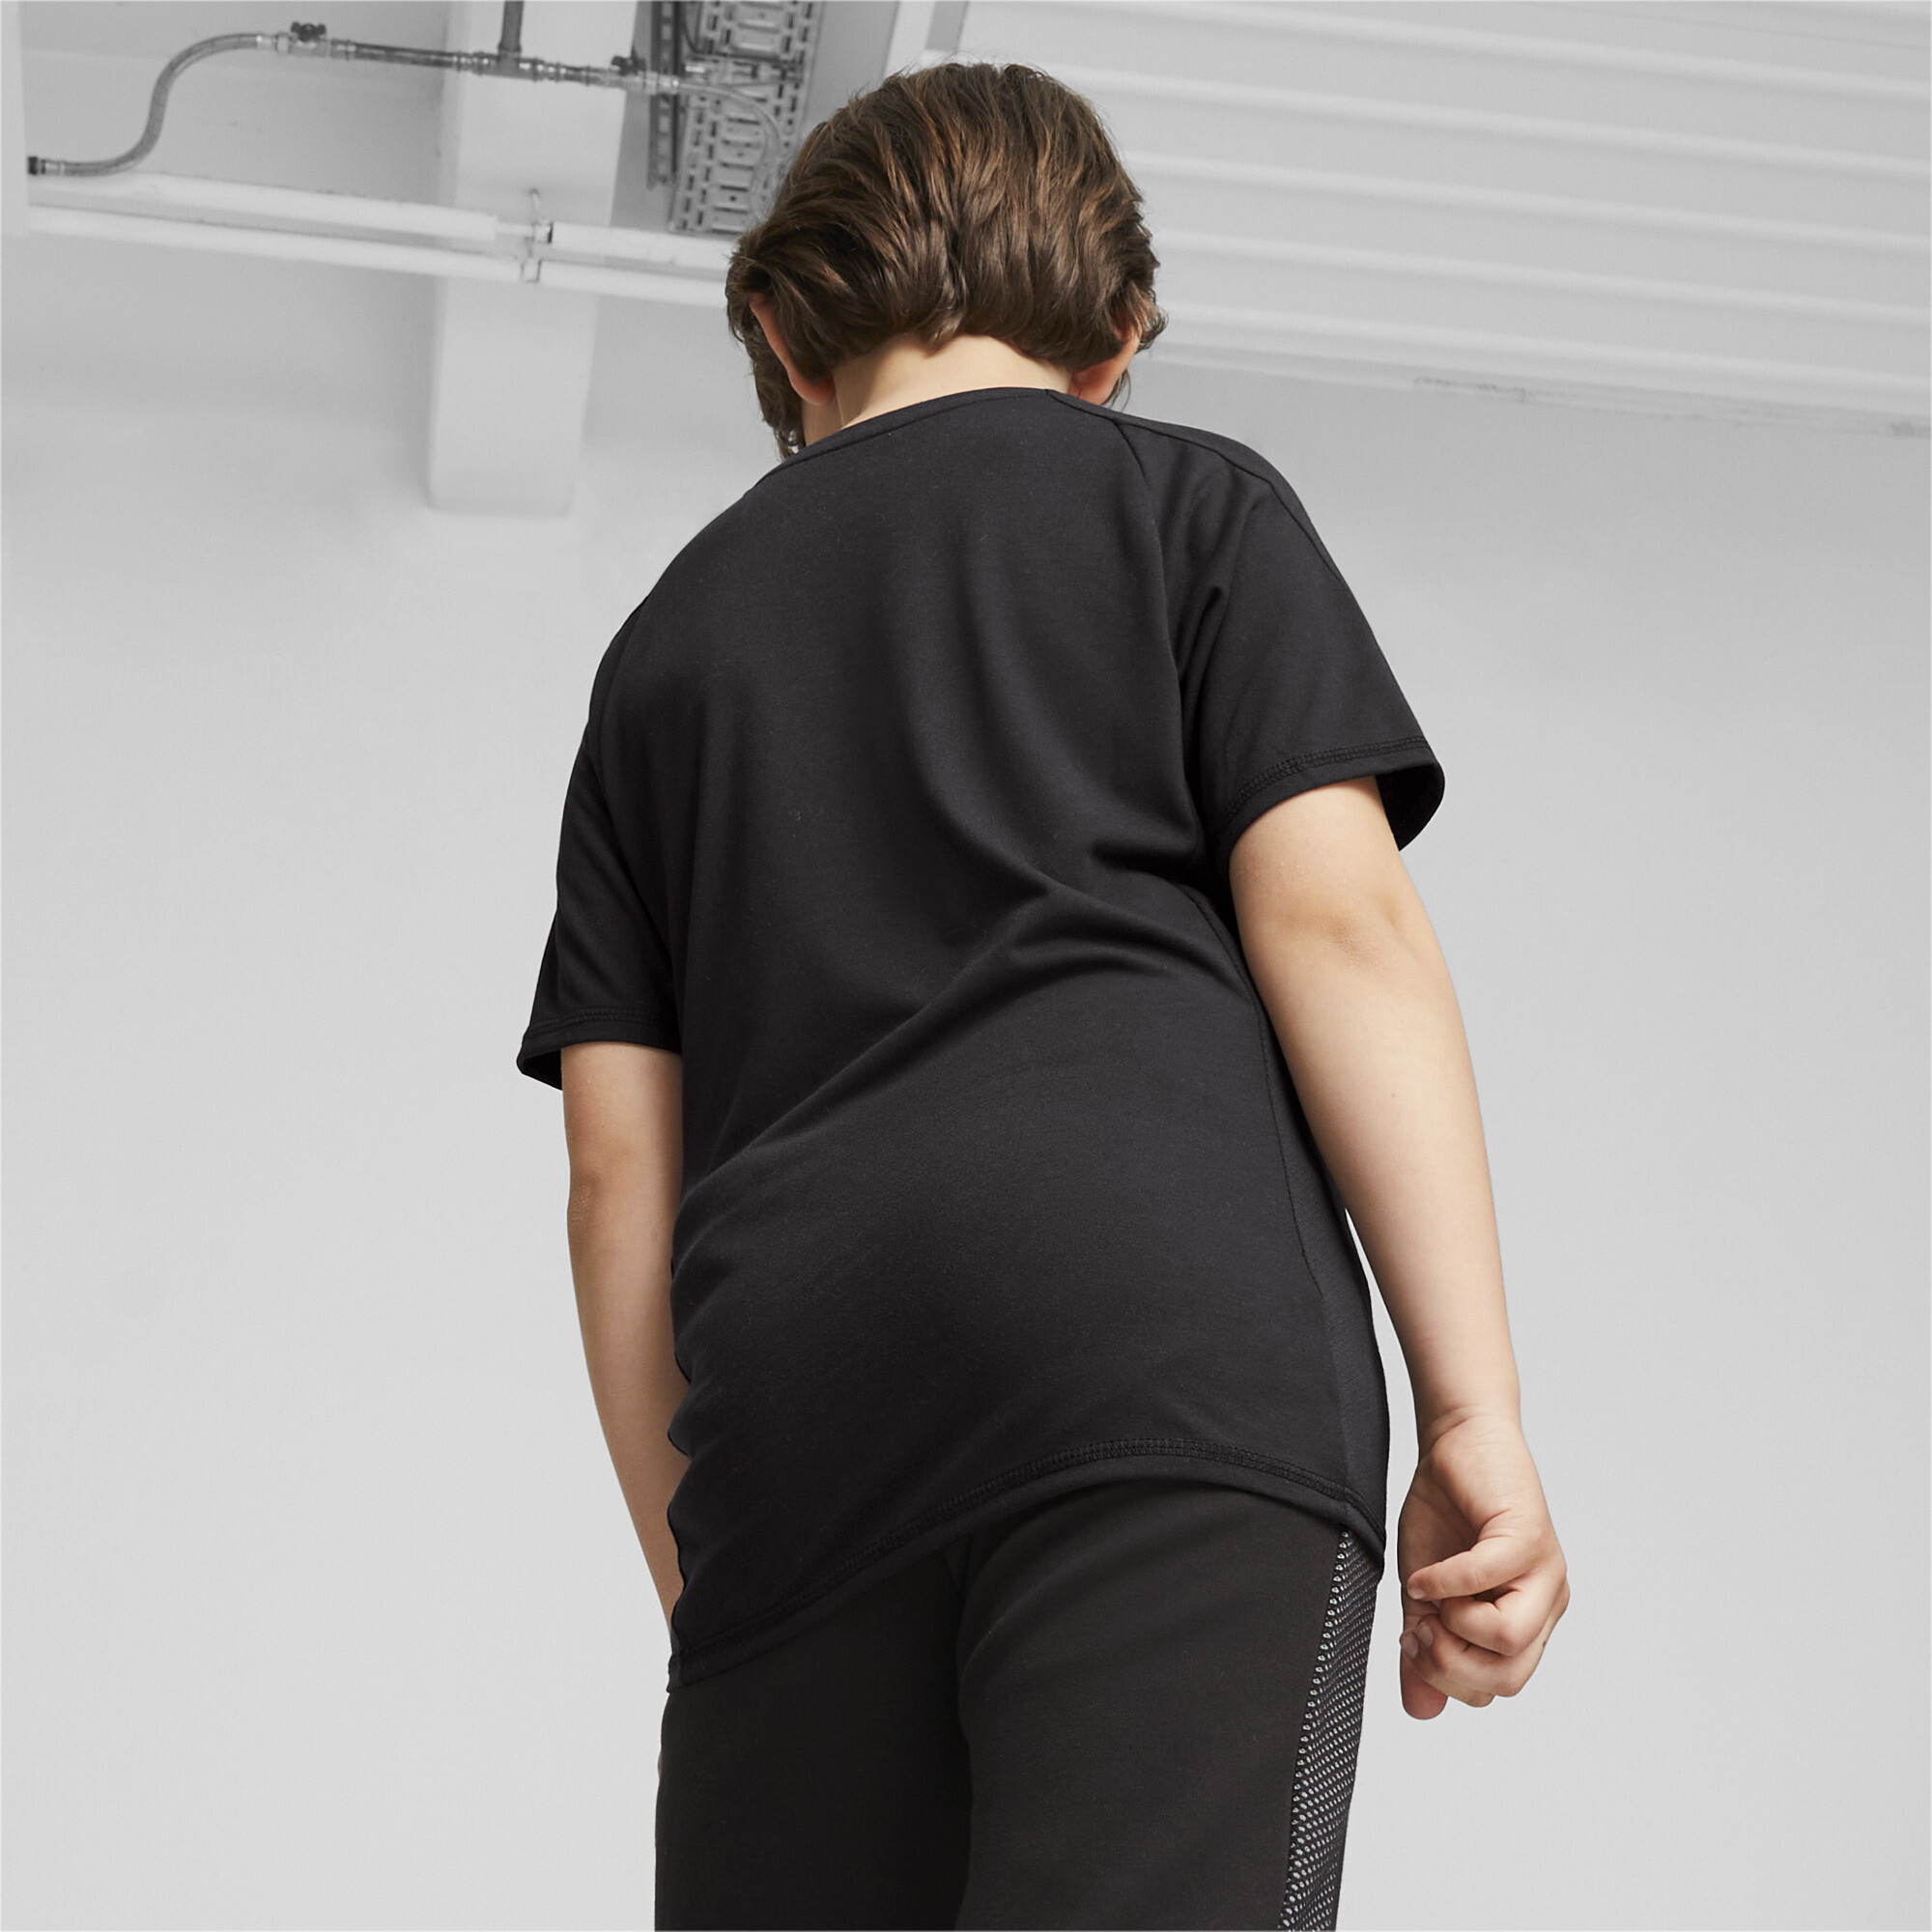 PUMA Evostripe T-Shirt In Black, Size 9-10 Youth